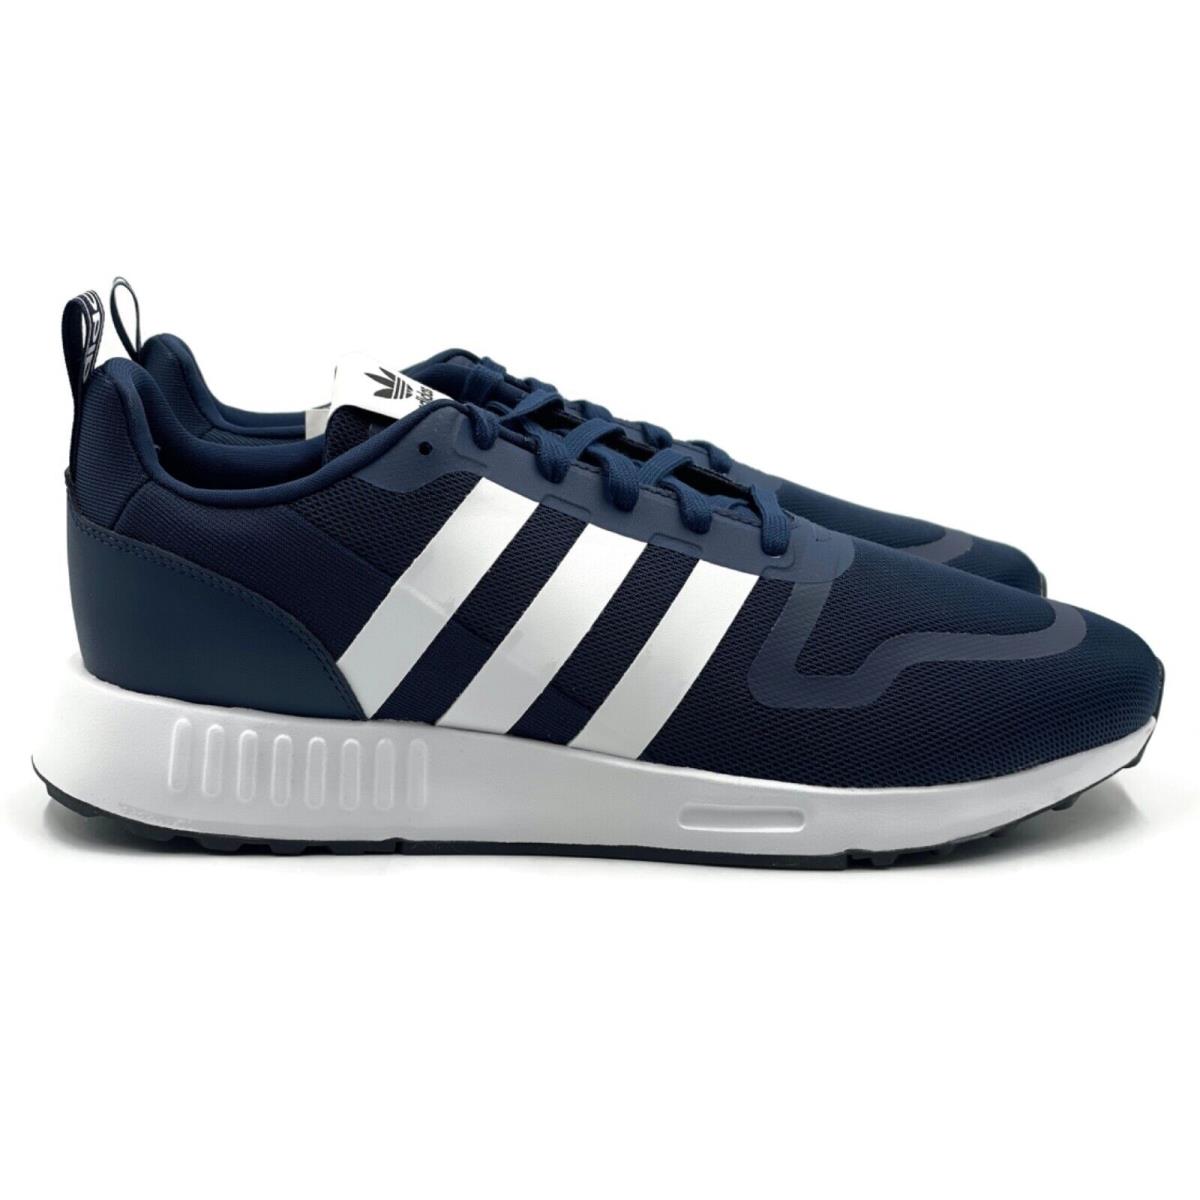 Adidas Multix Mens Size 11.5 Casual Running Shoe Blue White Trainer Sneaker